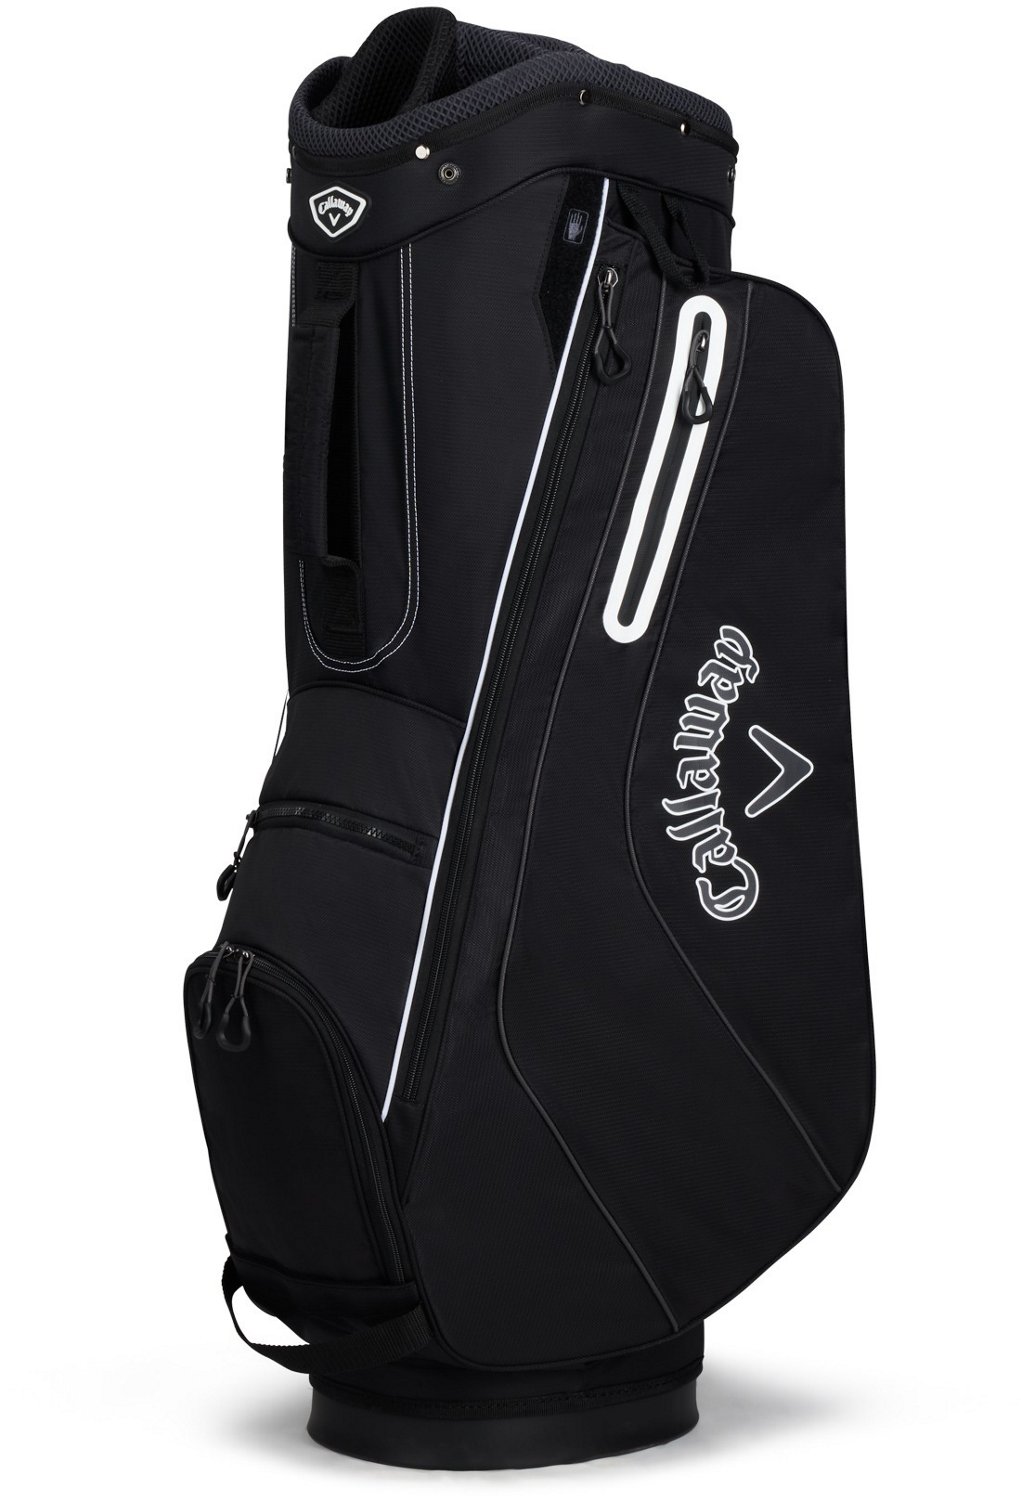 Callaway T4.5 Golf Cart Bag